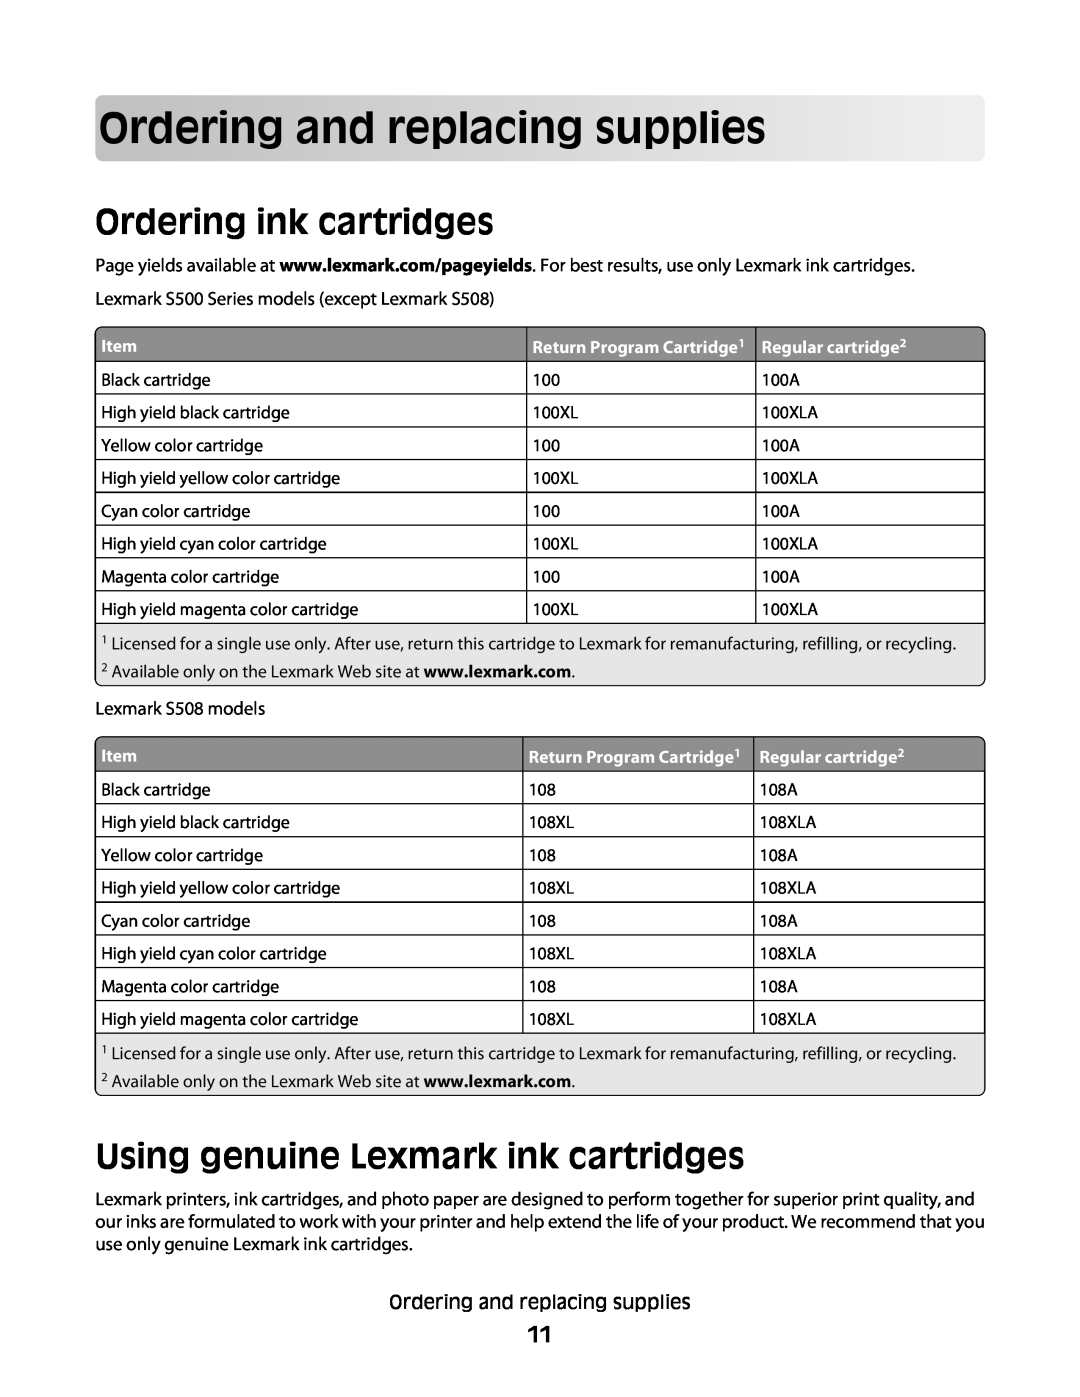 Lexmark 301, S500, 30E manual Orderin g and replacingsupplies, Ordering ink cartridges, Using genuine Lexmark ink cartridges 